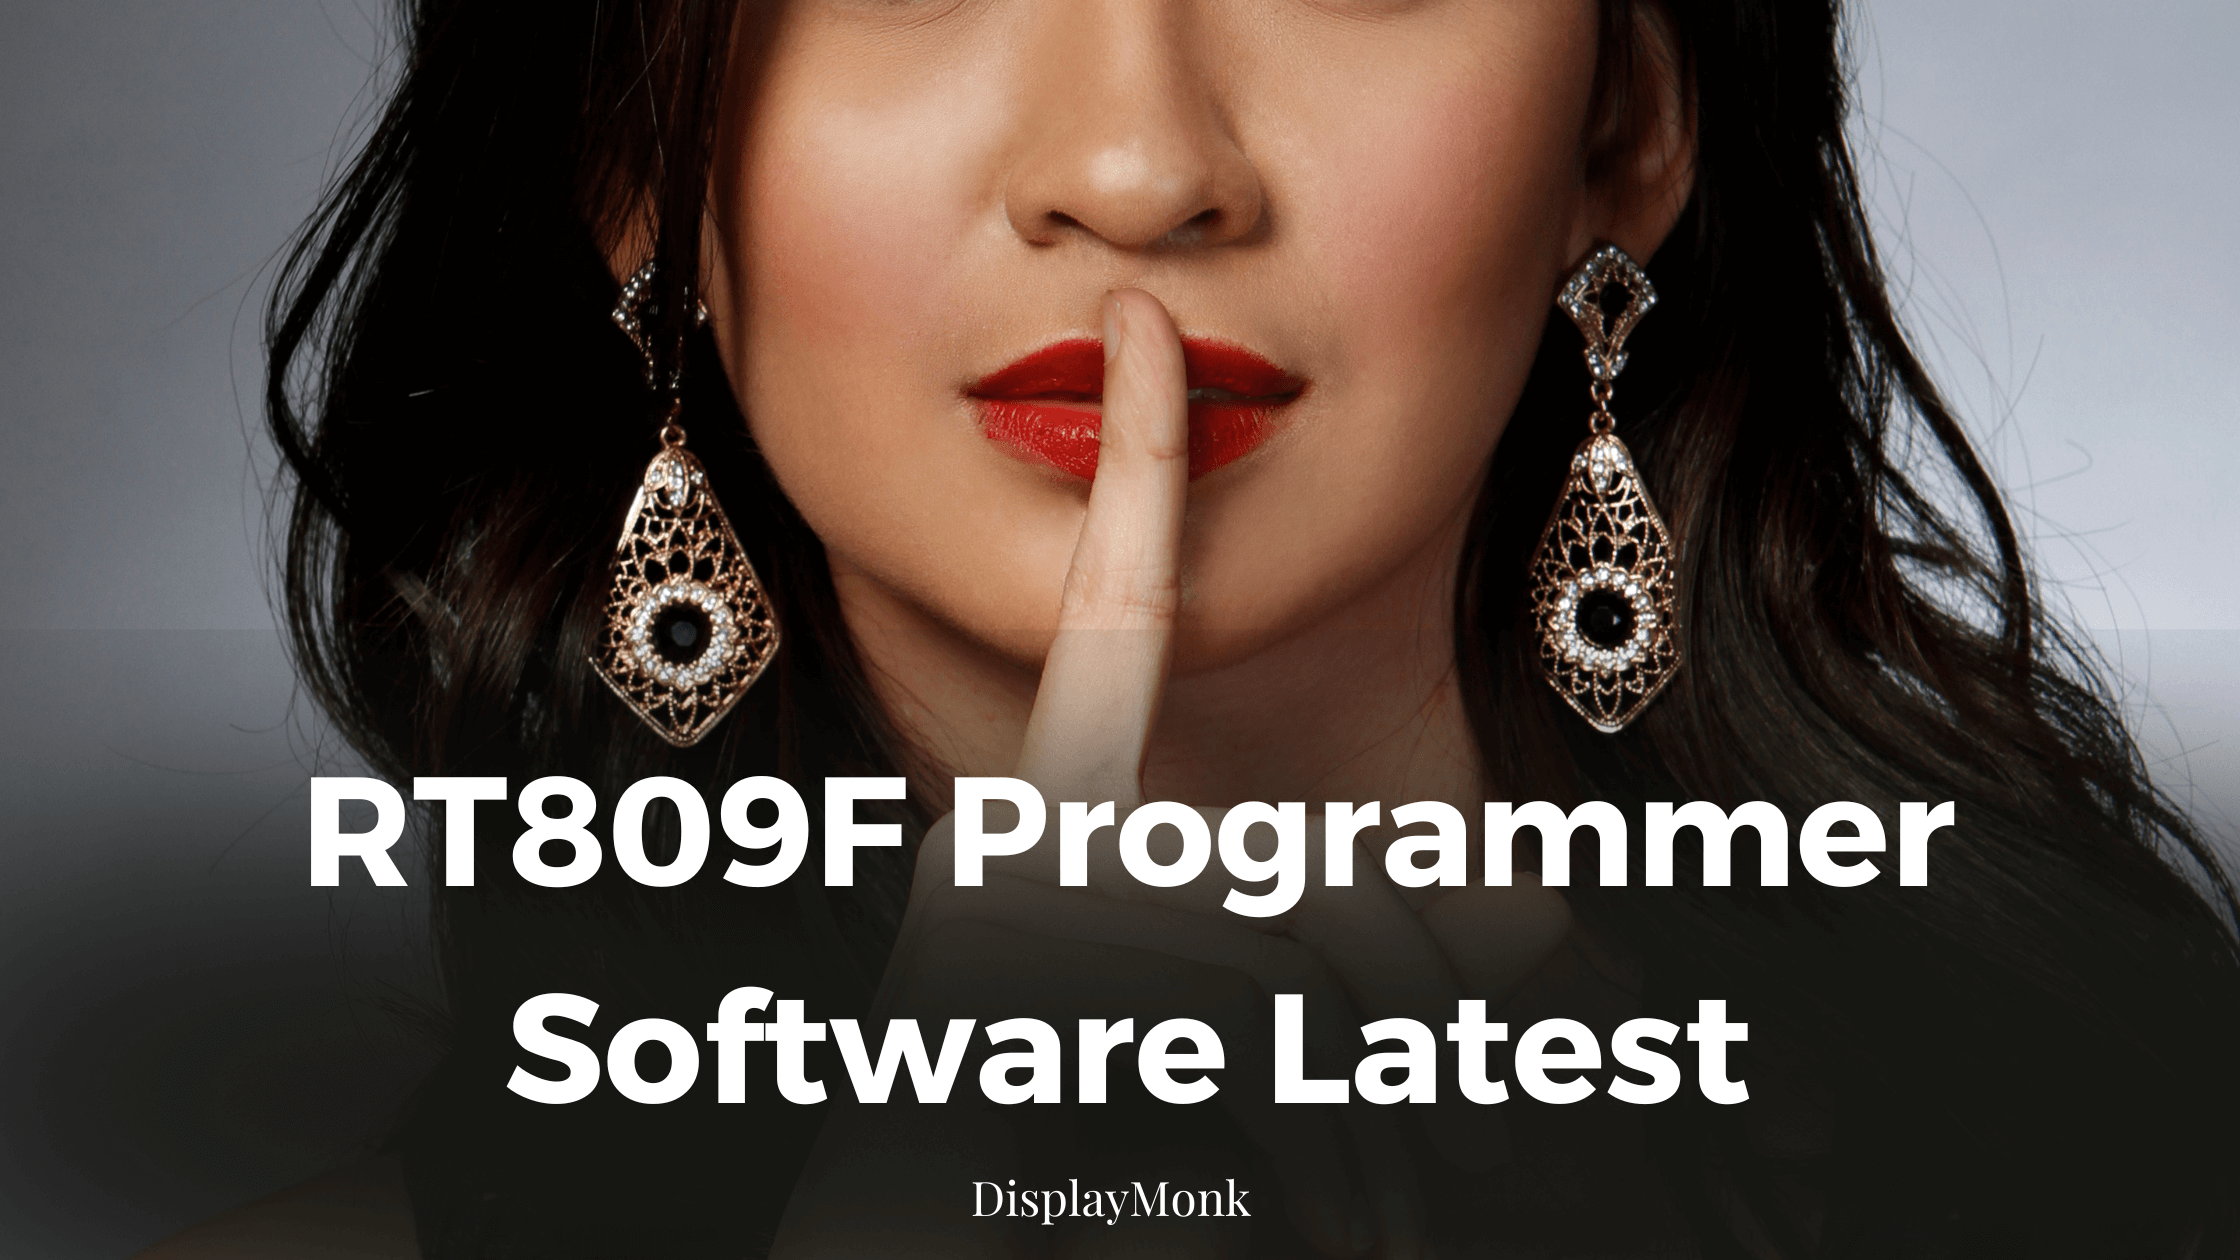 RT809F Programmer Software Latest